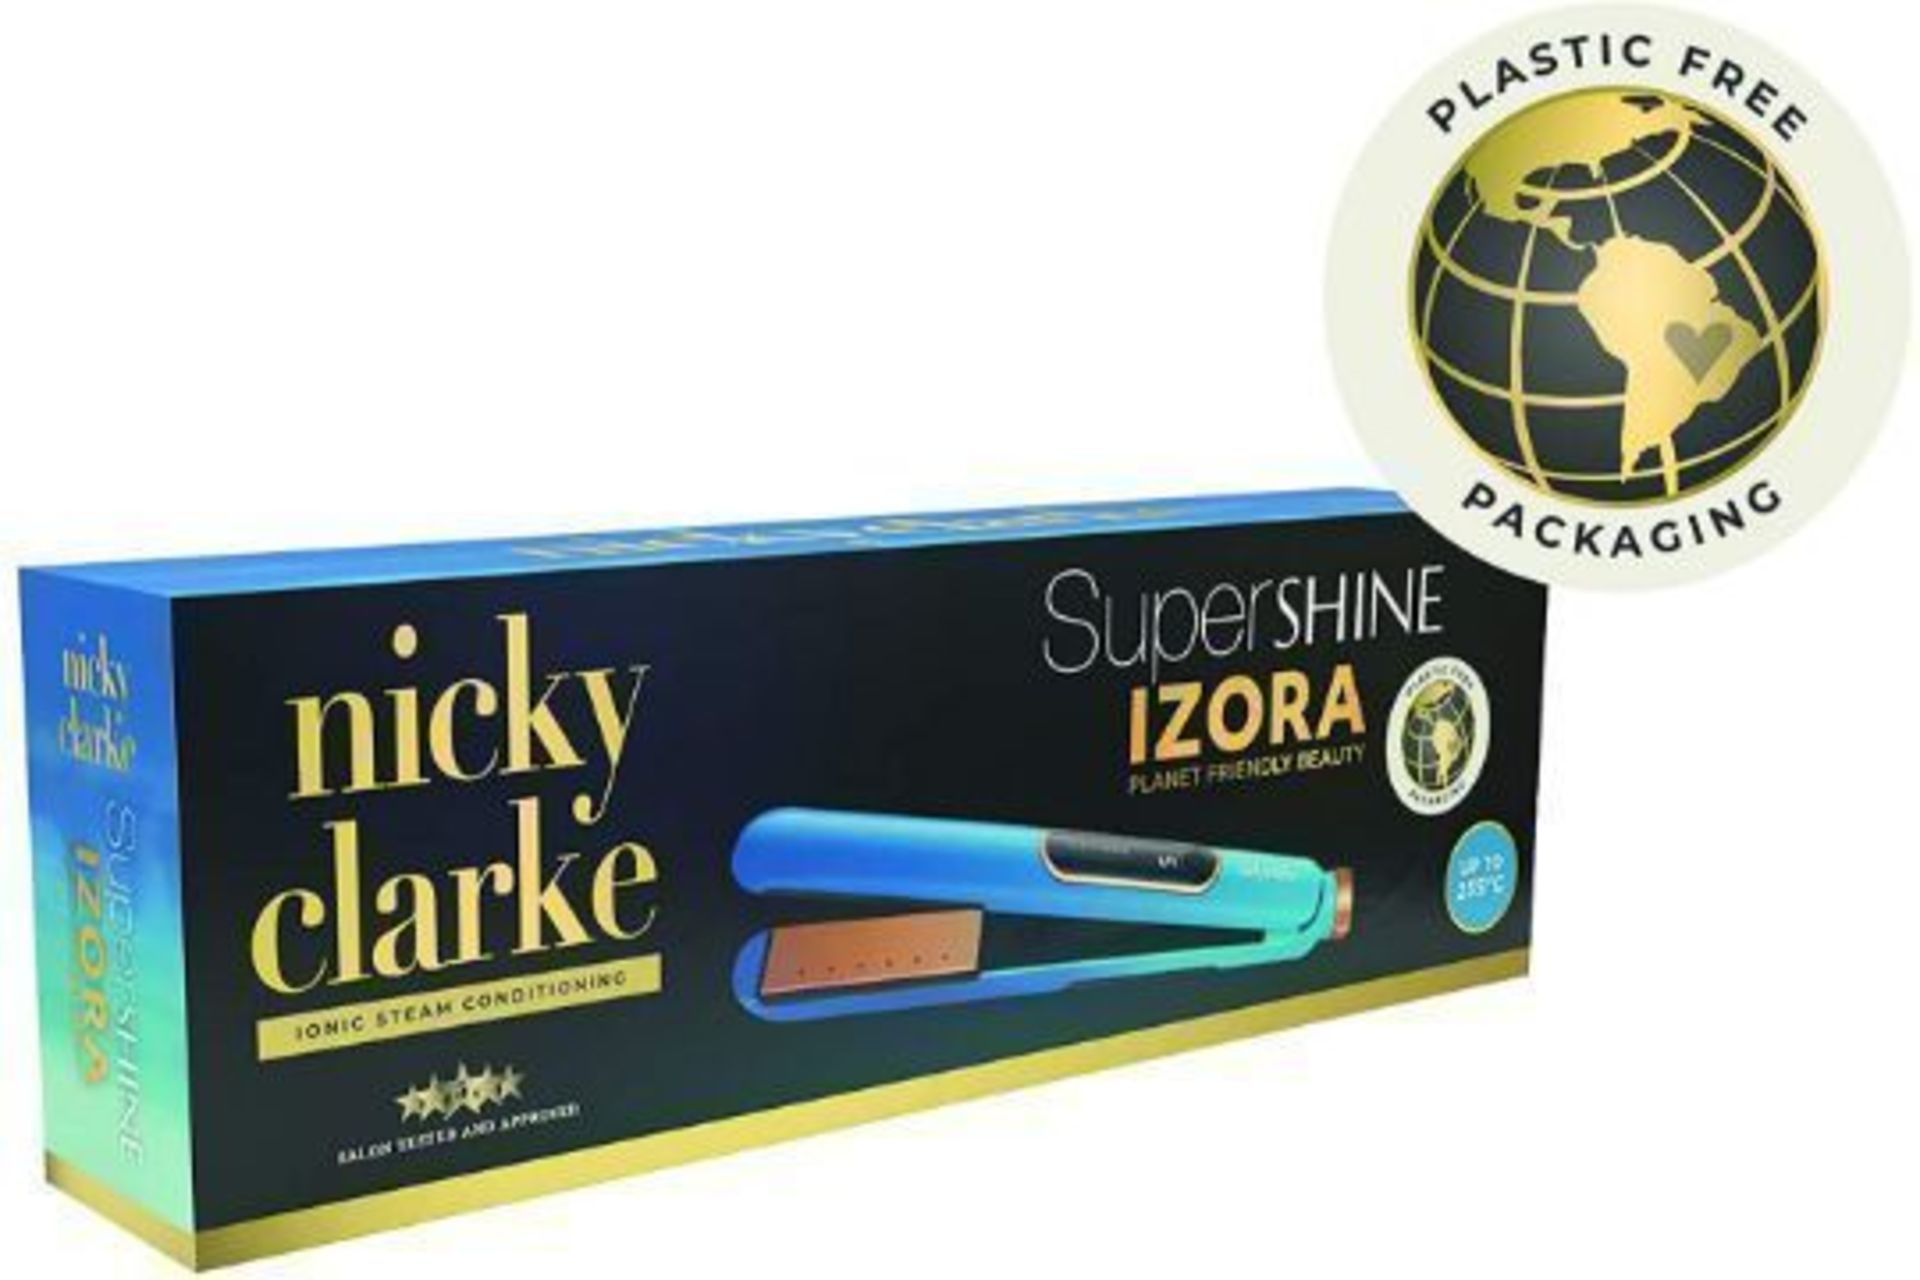 Brand NewNicky Clarke SuperShine Izora Straightener, Ionic Steam Conditioning, 3m Cable - RRP £45. - Image 3 of 3